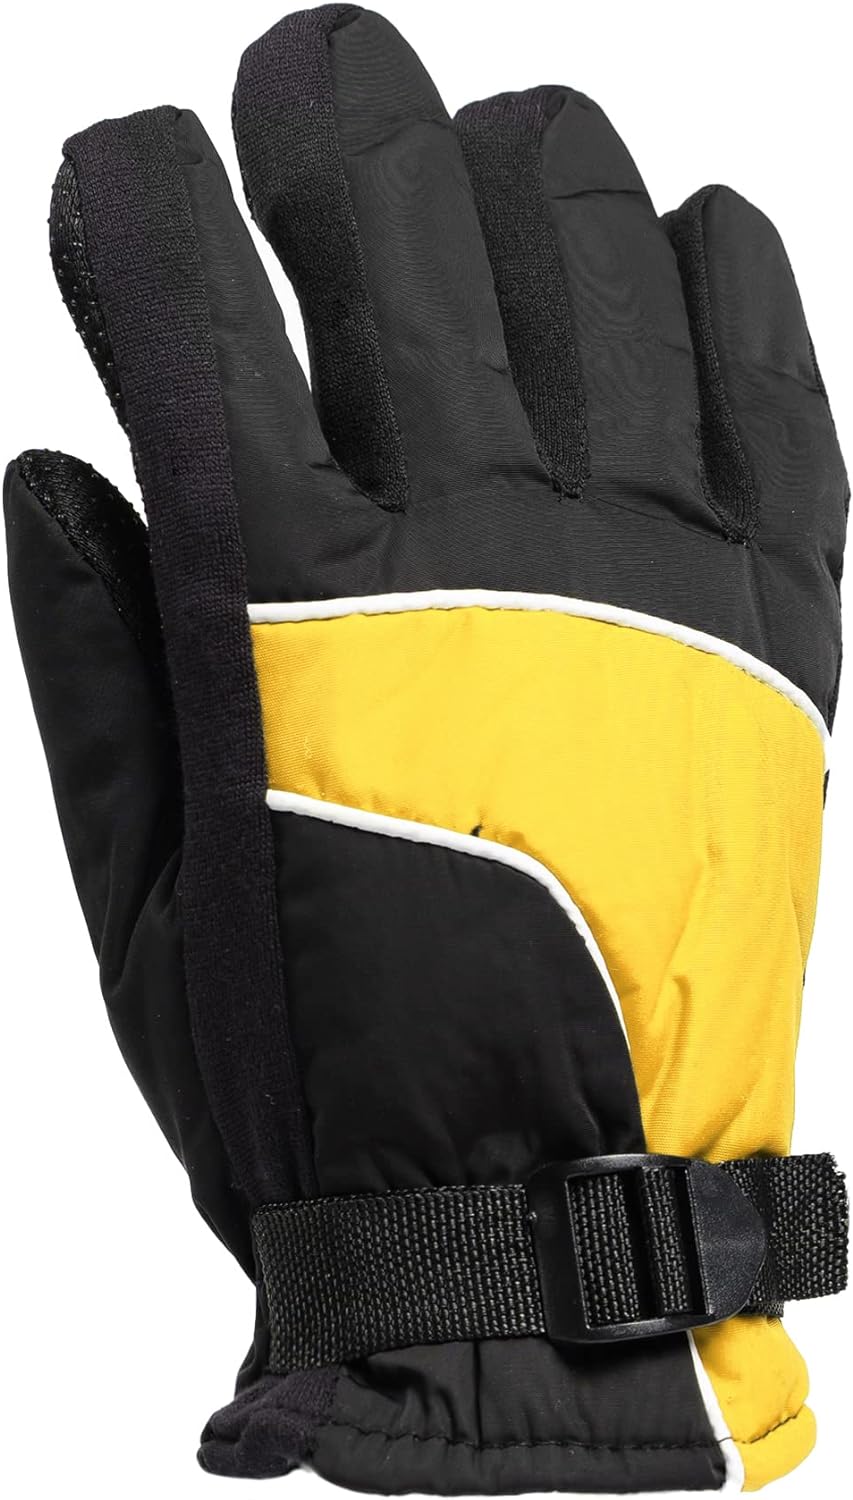 Yacht & Smith Kids Ski Glove, Fleece Lined Water Resistant Bulk Kids Winter Gloves 36 Packs